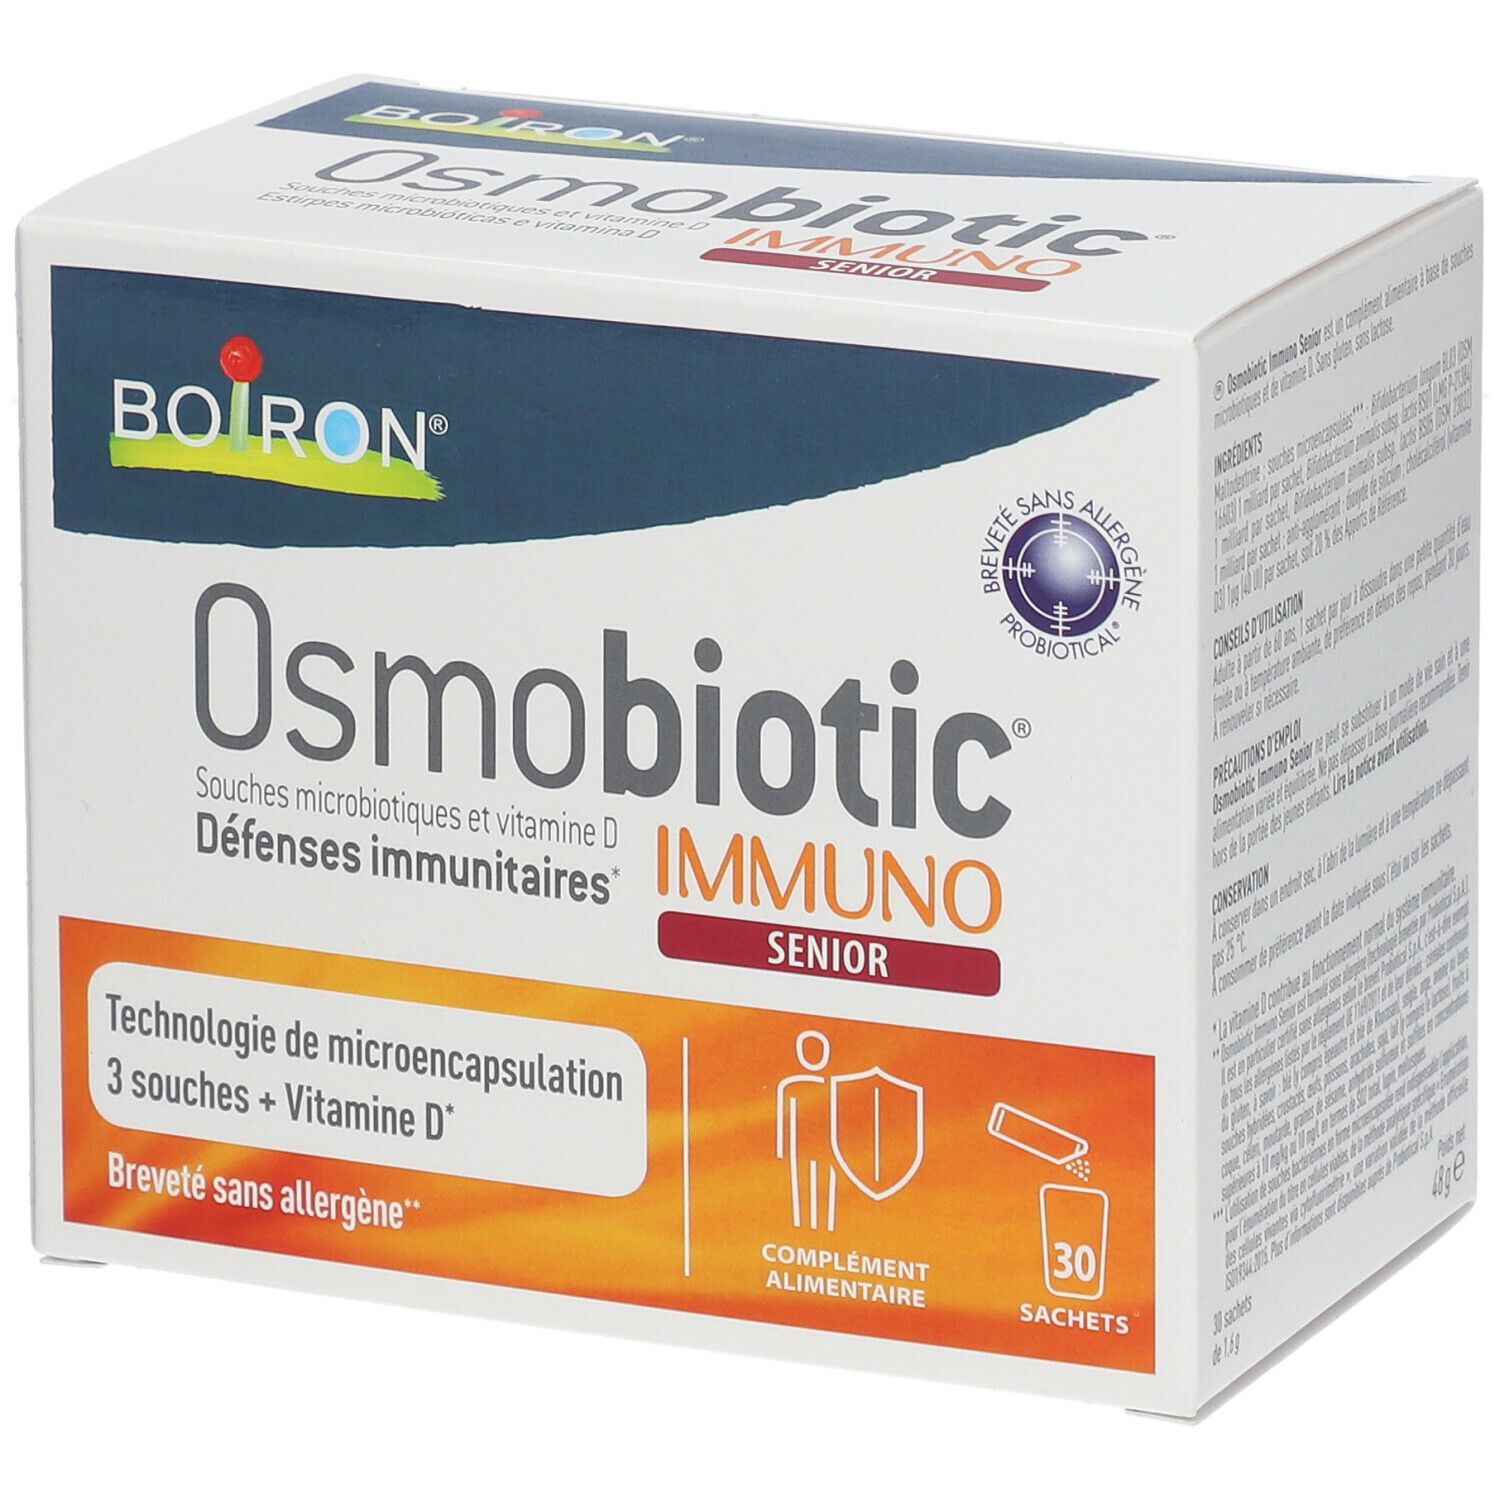 Boiron® Osmobiotic® Immuno Senior